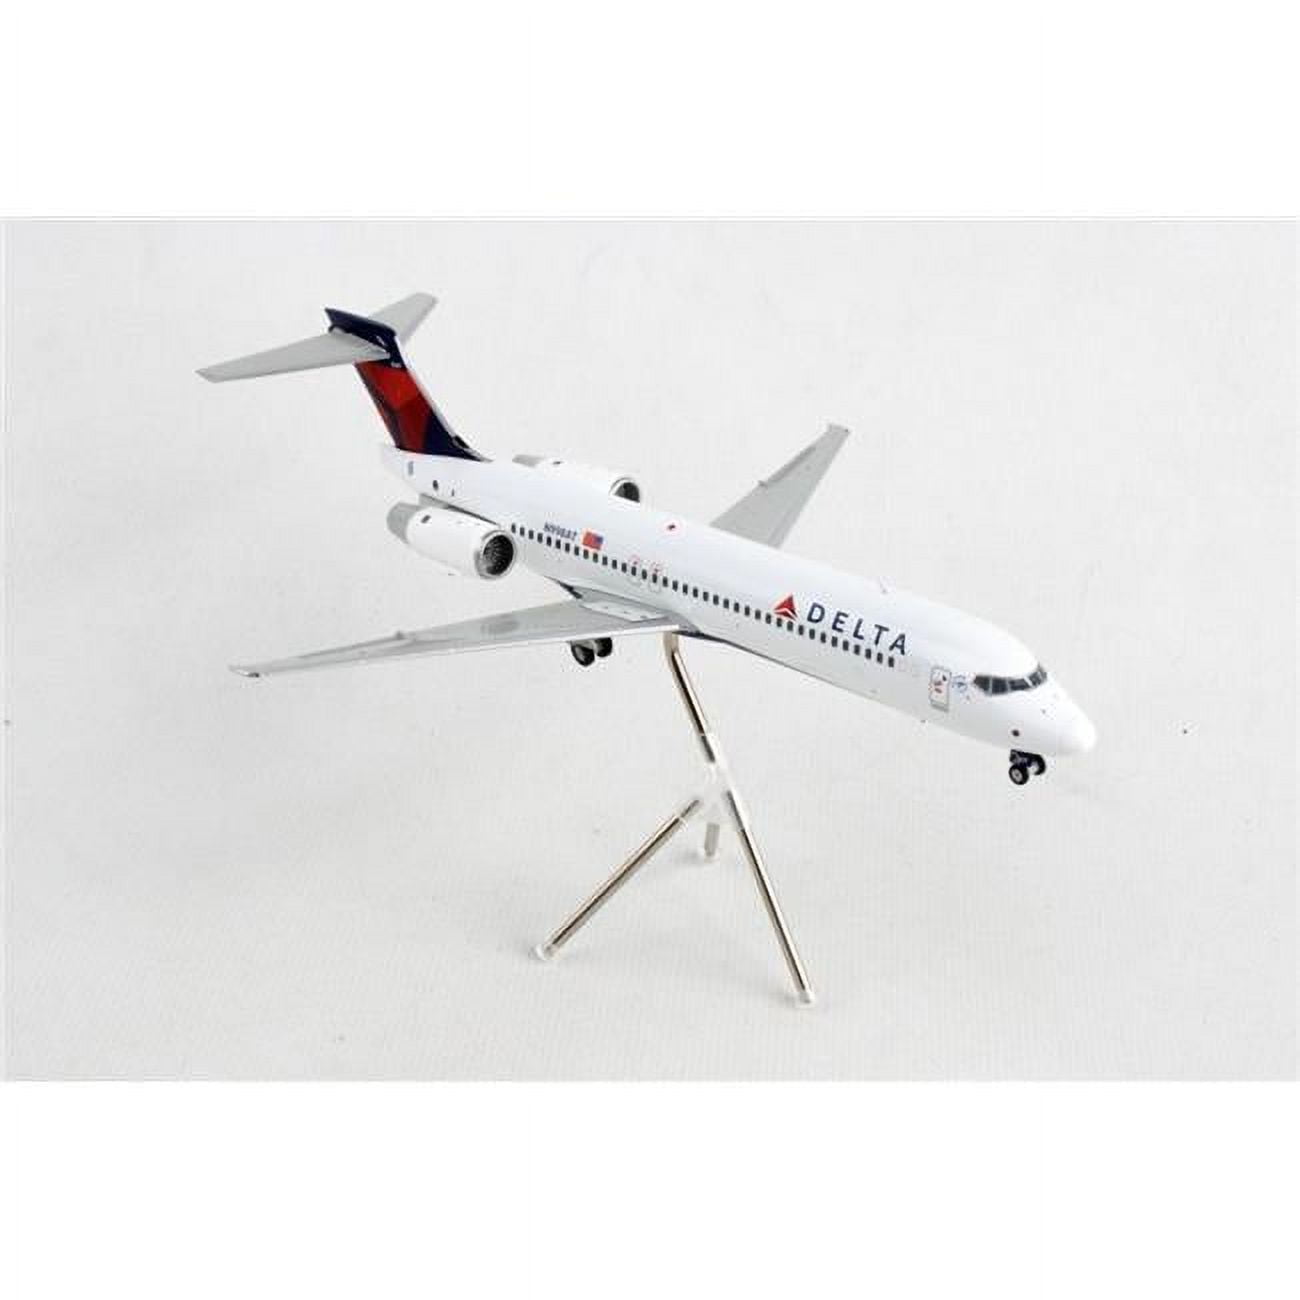 ThinkandPlay 1-200 Scale Reg No. N998AT Aircraft Model Plane for Delta Air Lines B717